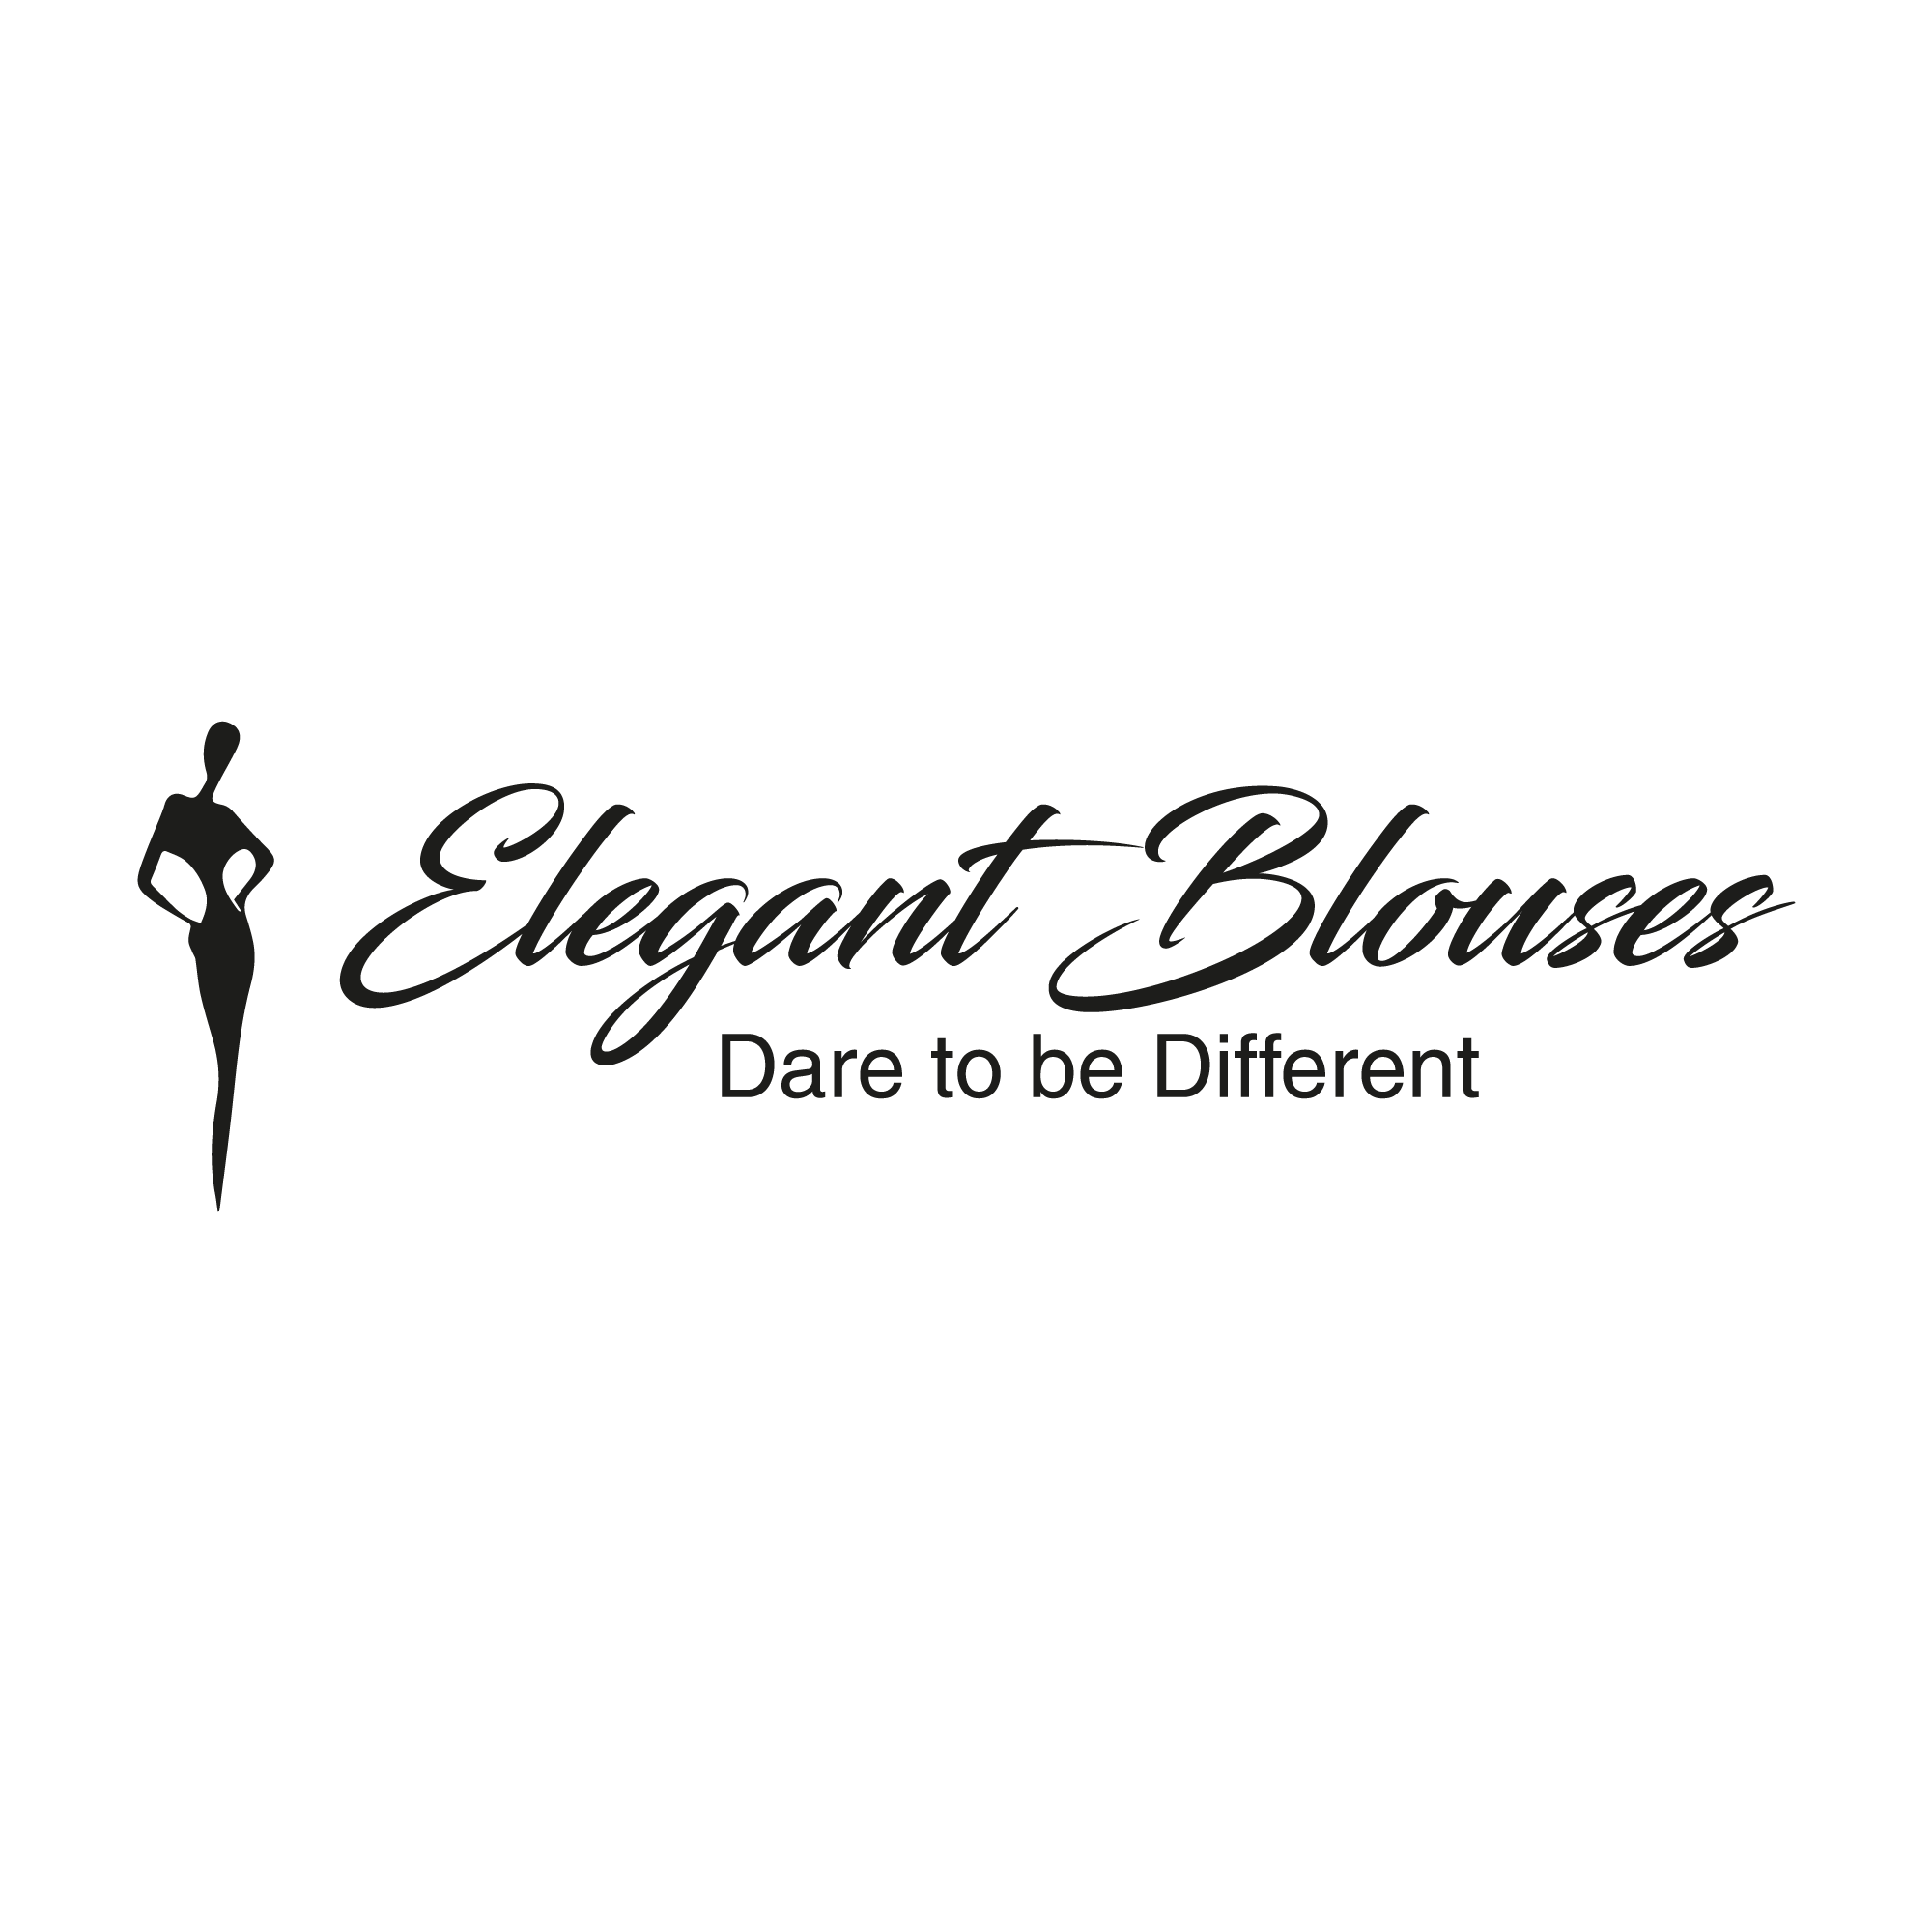 Elegant Blouses